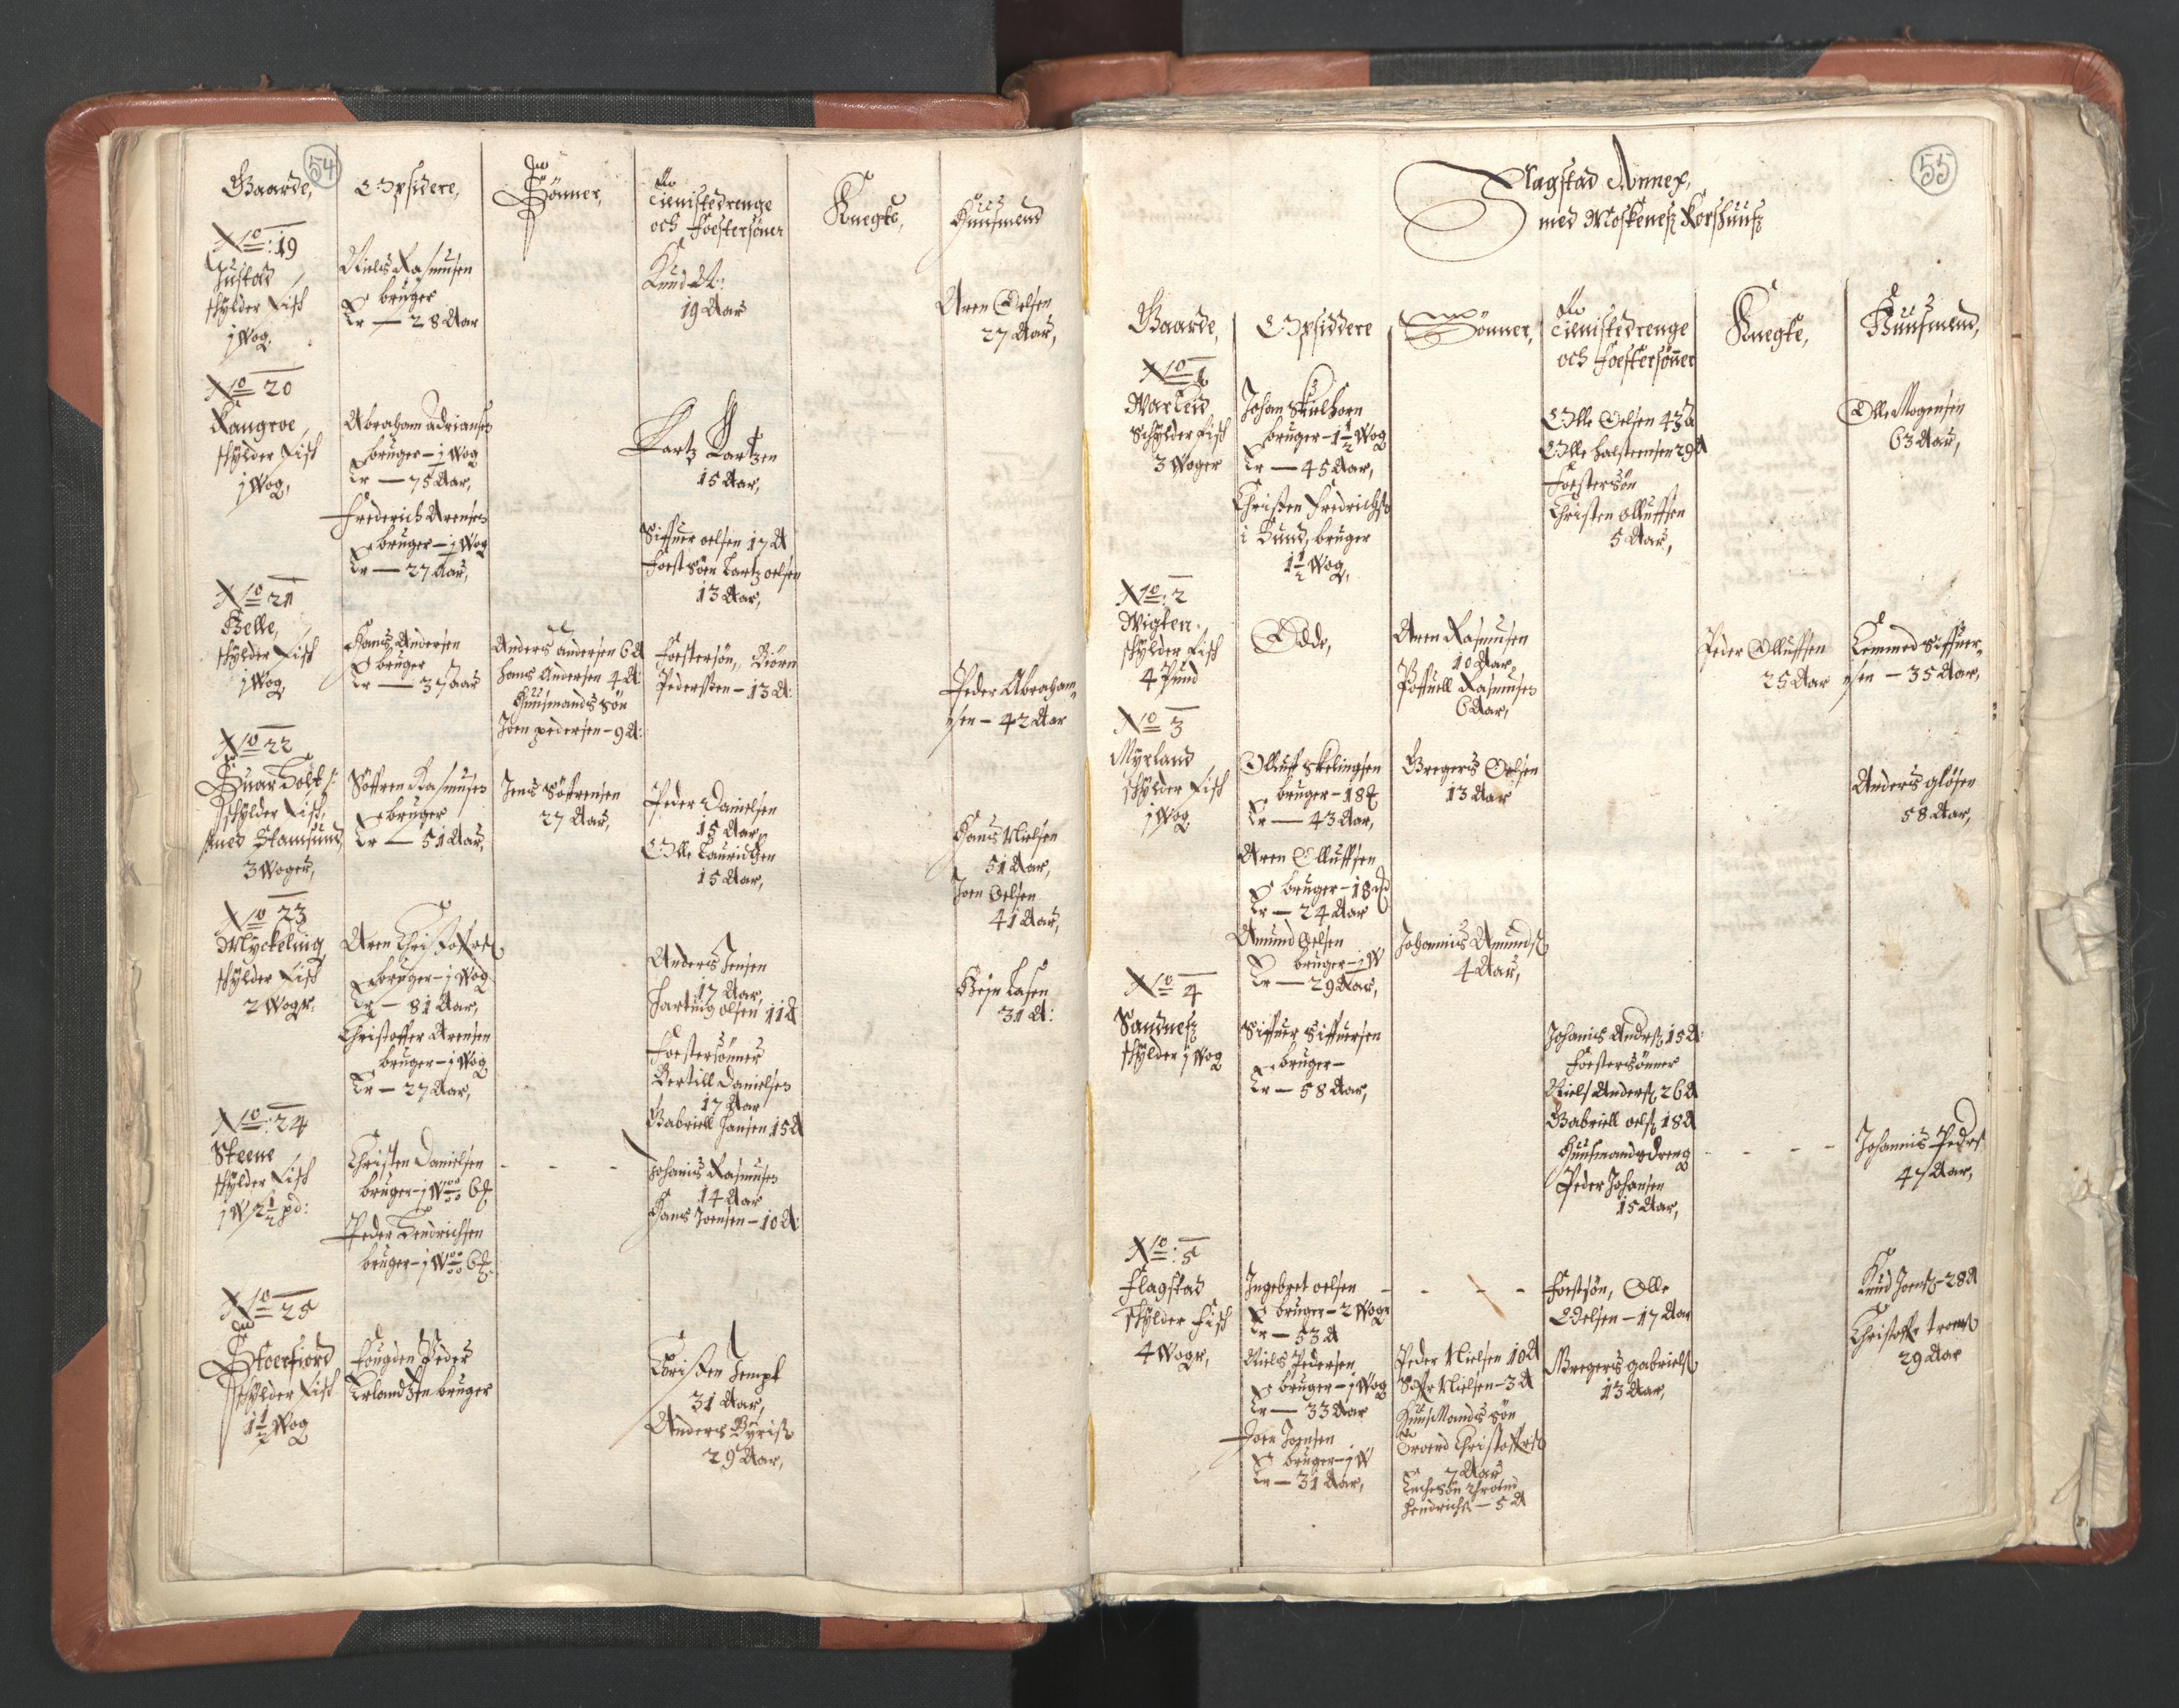 RA, Vicar's Census 1664-1666, no. 36: Lofoten and Vesterålen deanery, Senja deanery and Troms deanery, 1664-1666, p. 54-55